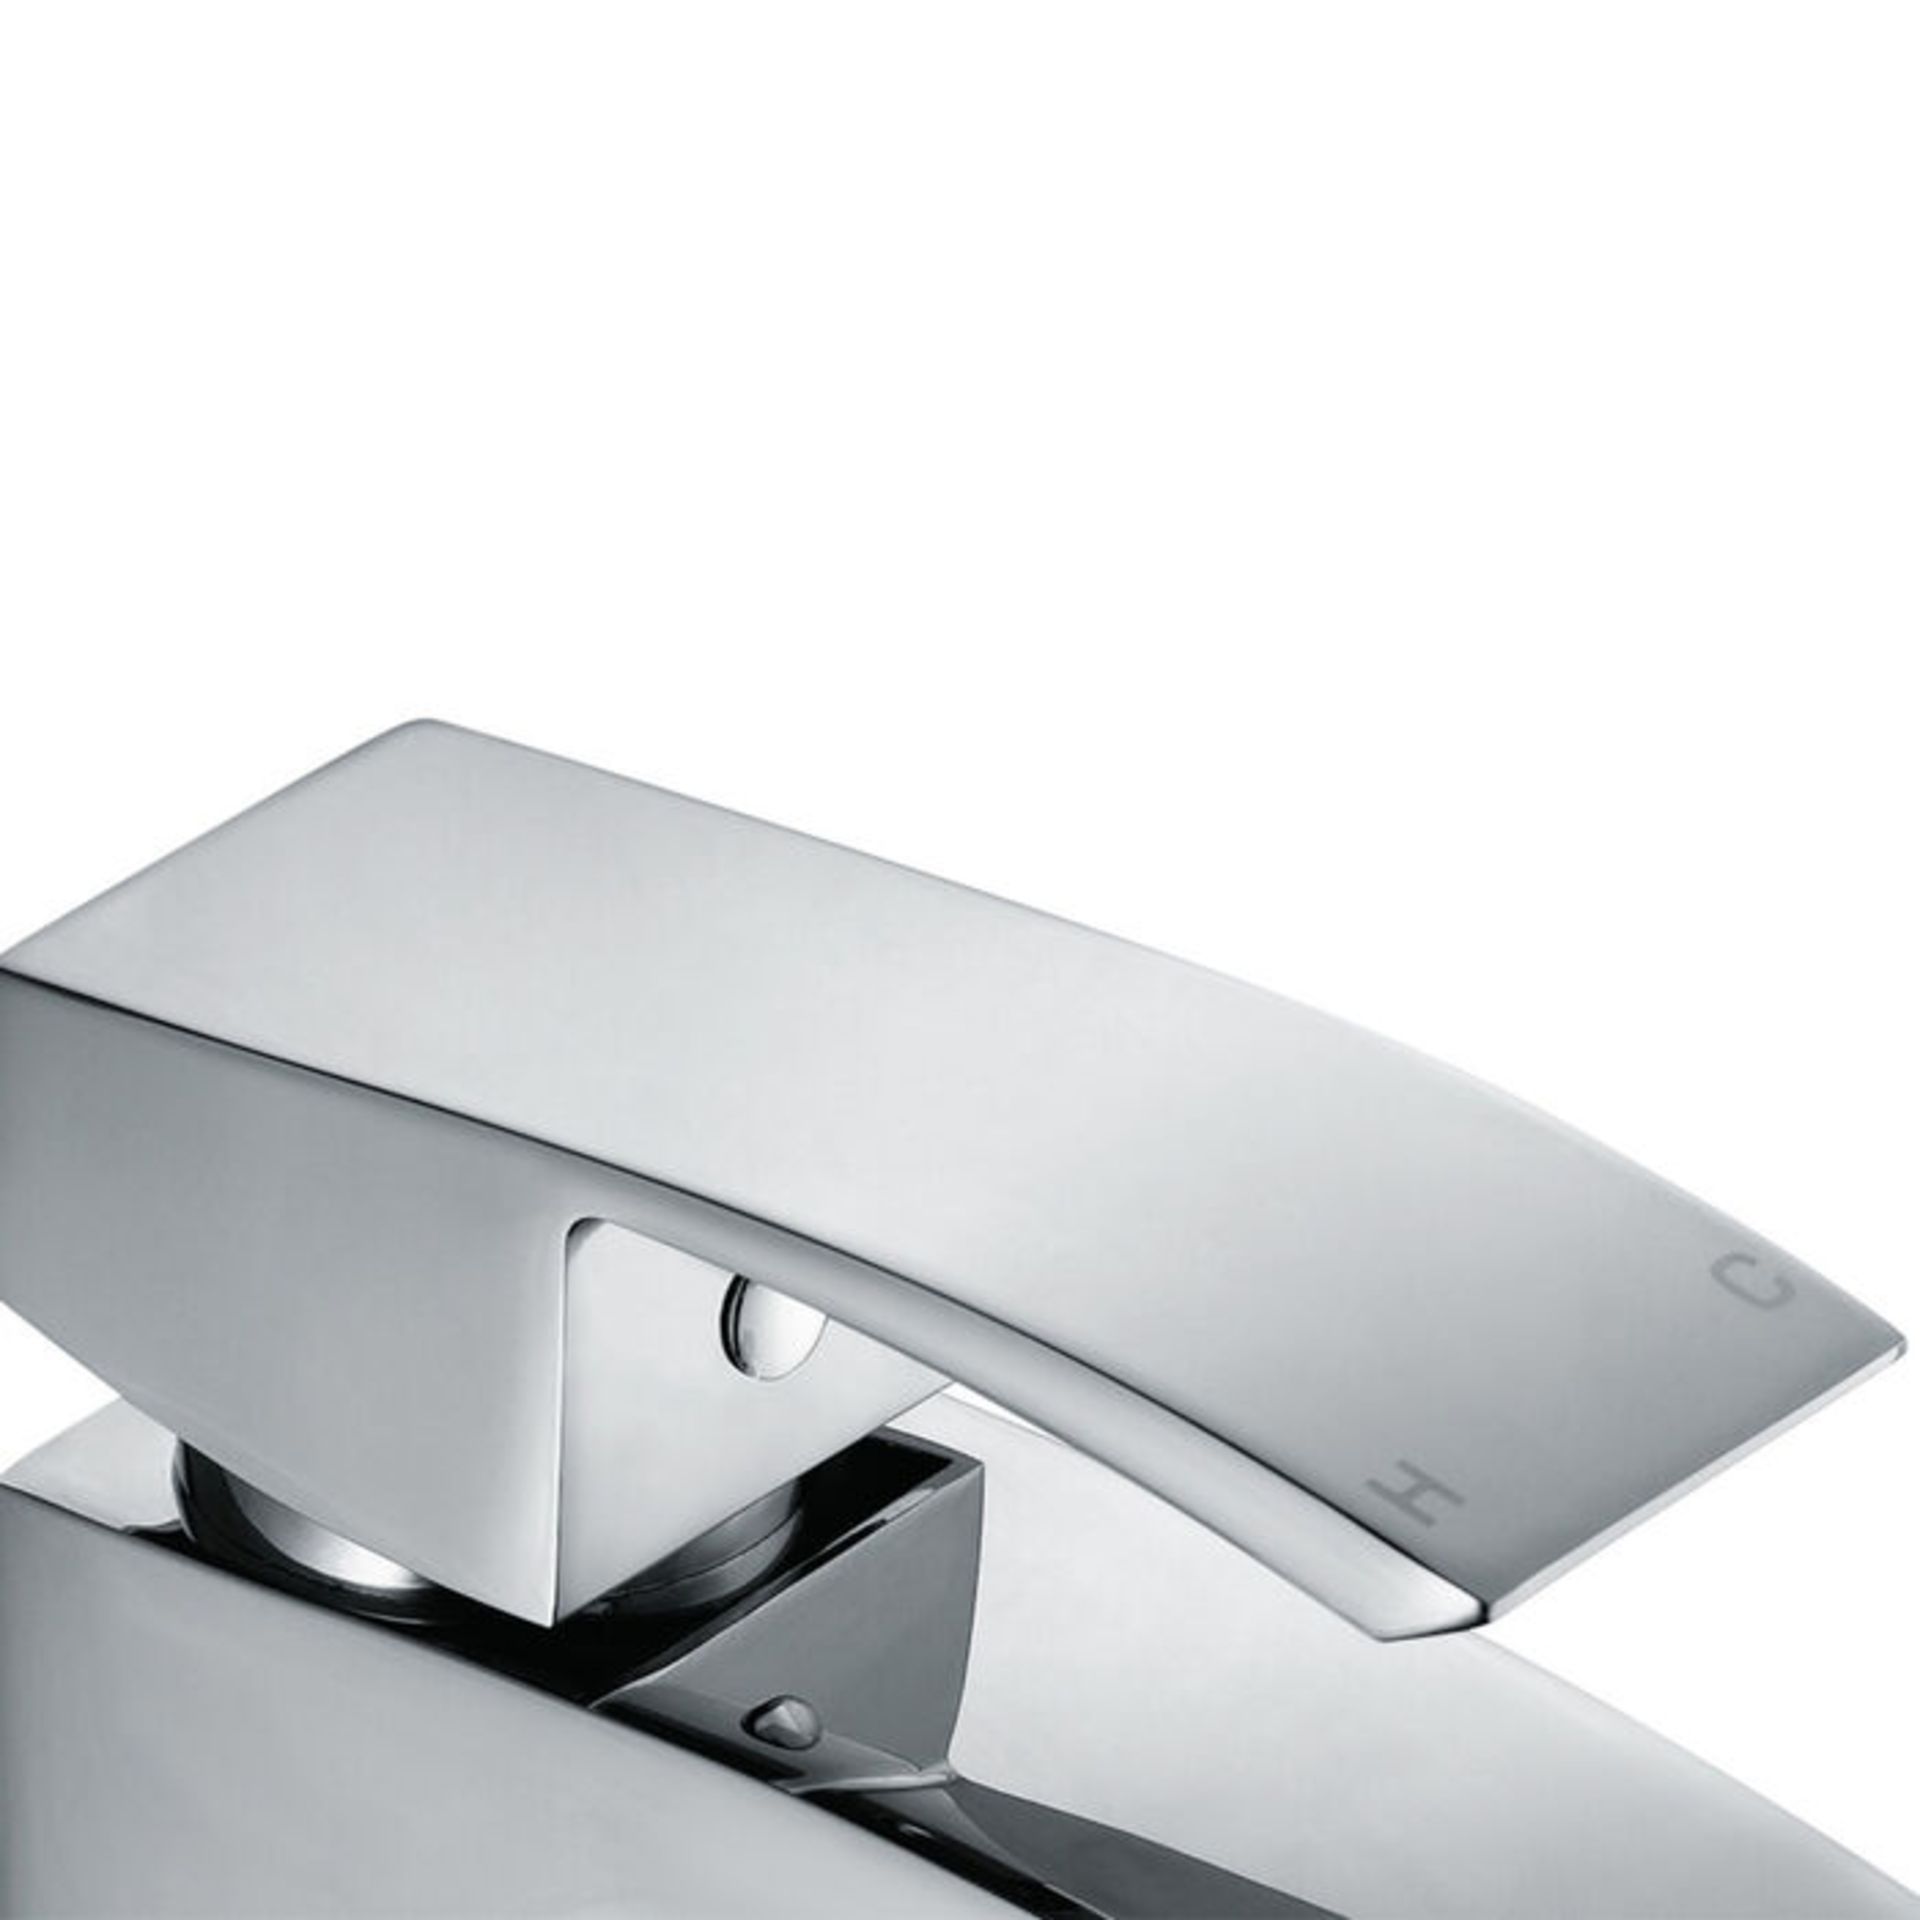 (E1026) Harper Sink Mixer Tap Chrome Plated Solid Brass Mixer cartridge Minimum 0.5 bar wate... - Image 3 of 3